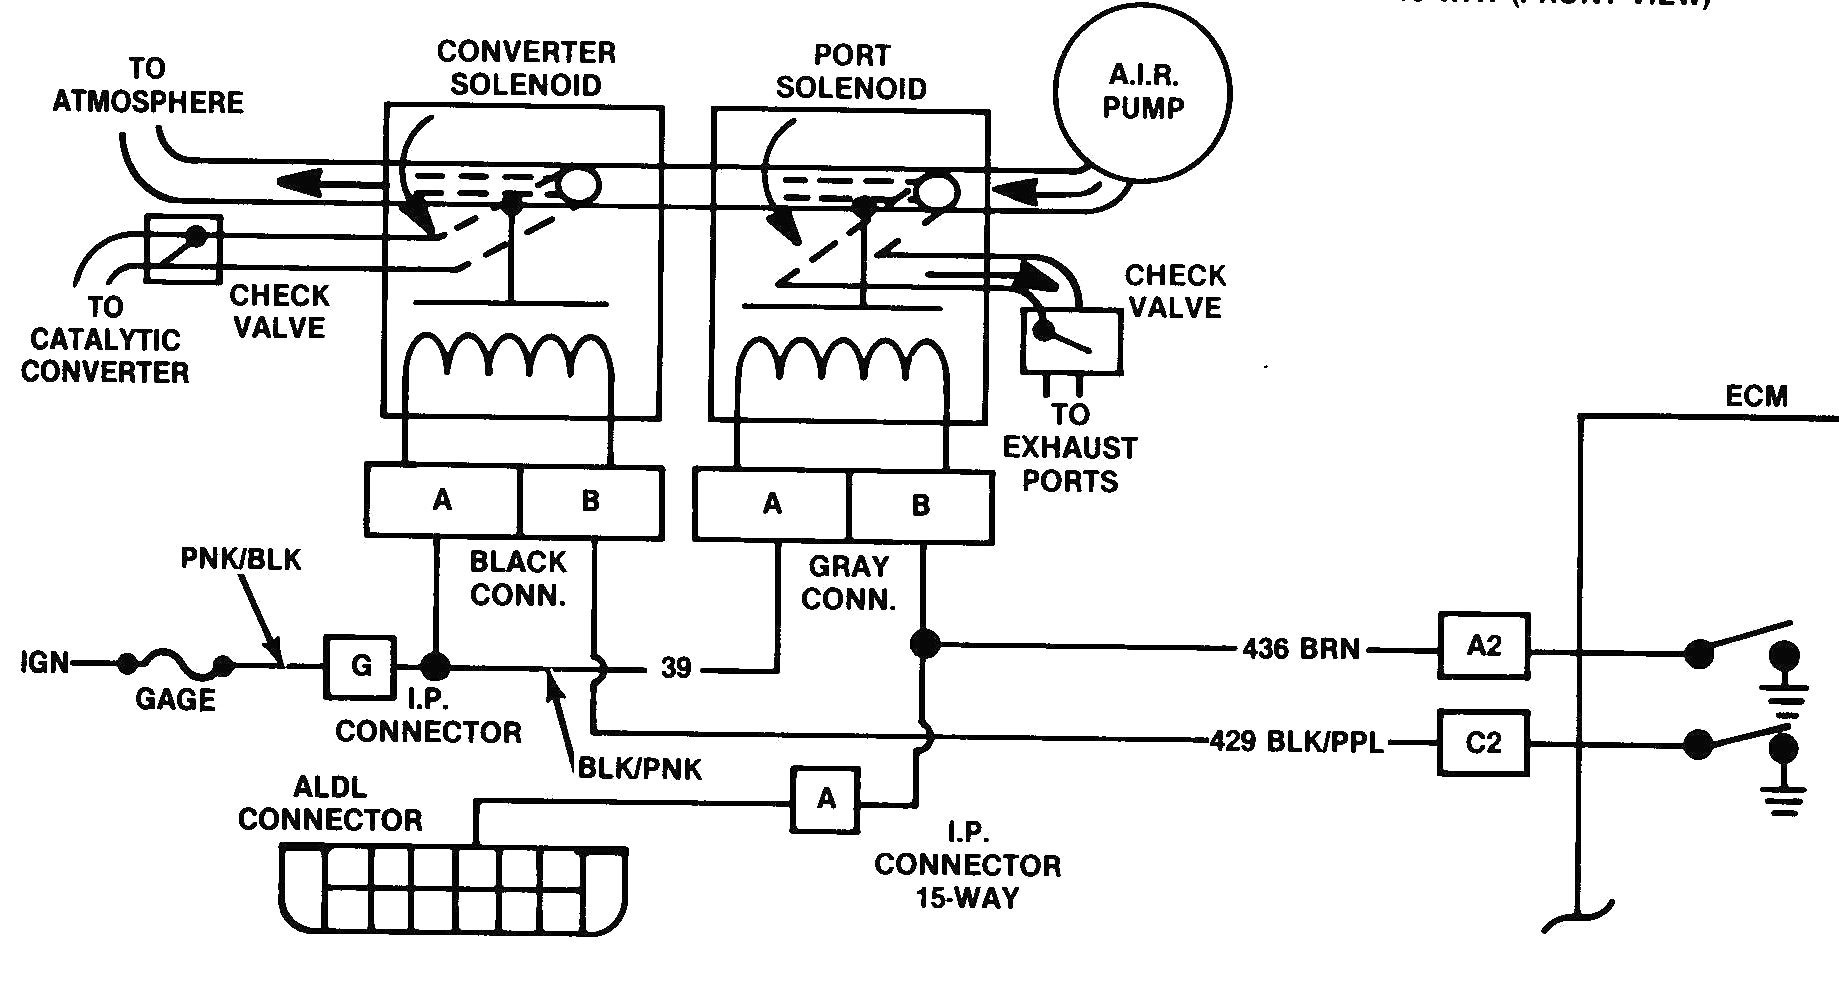 Gas solenoid Valve Wiring Diagram Lovely Gas Valve Wiring Diagram